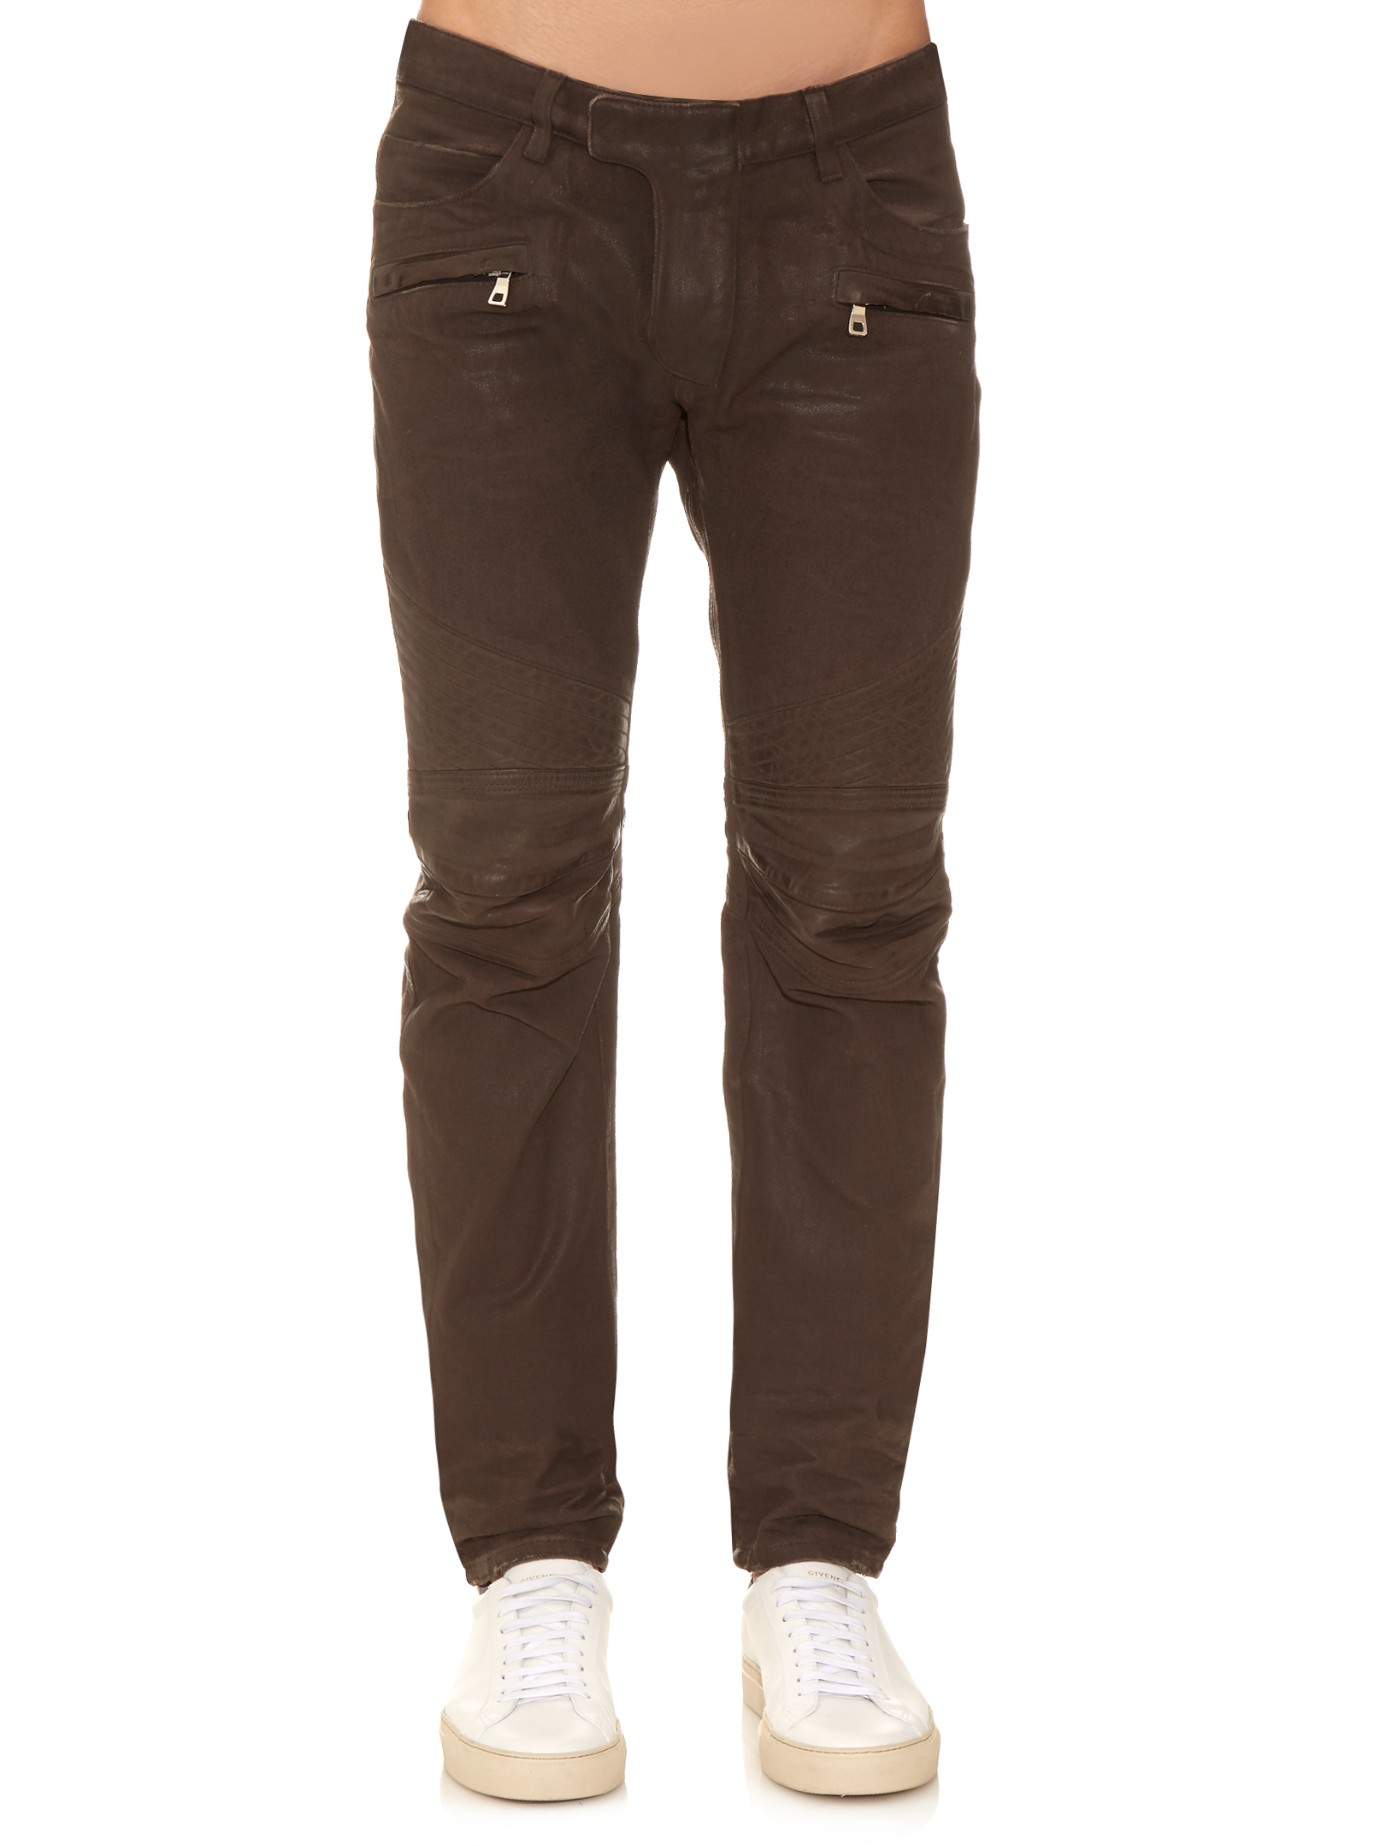 Balmain Biker Leather-panel Jeans in Brown for Men - Lyst